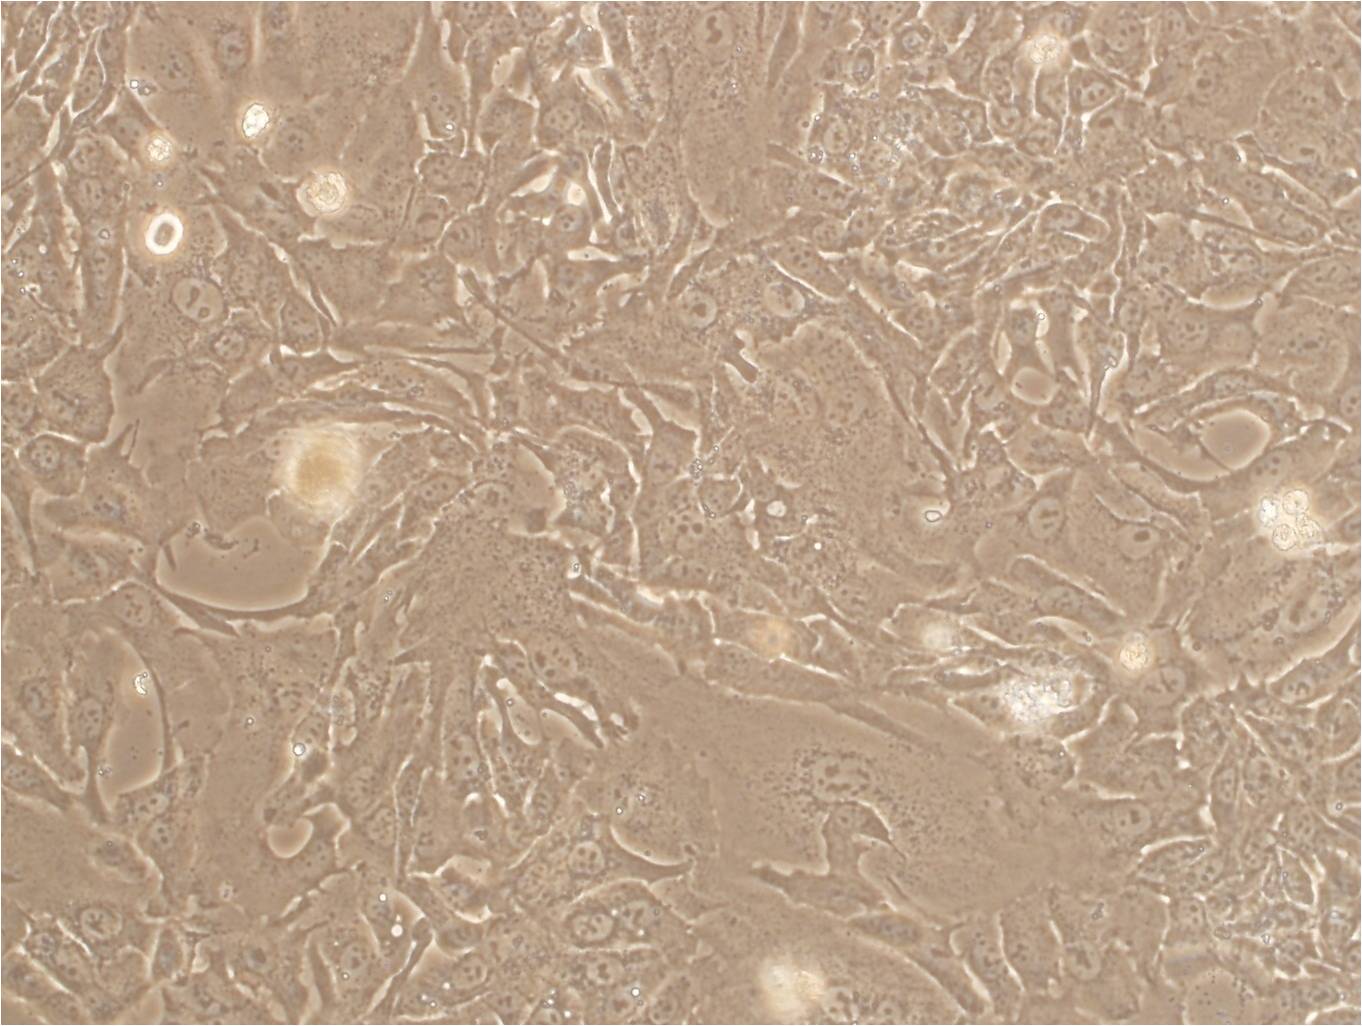 INS-1 Adherent大鼠胰岛细胞瘤细胞系,INS-1 Adherent